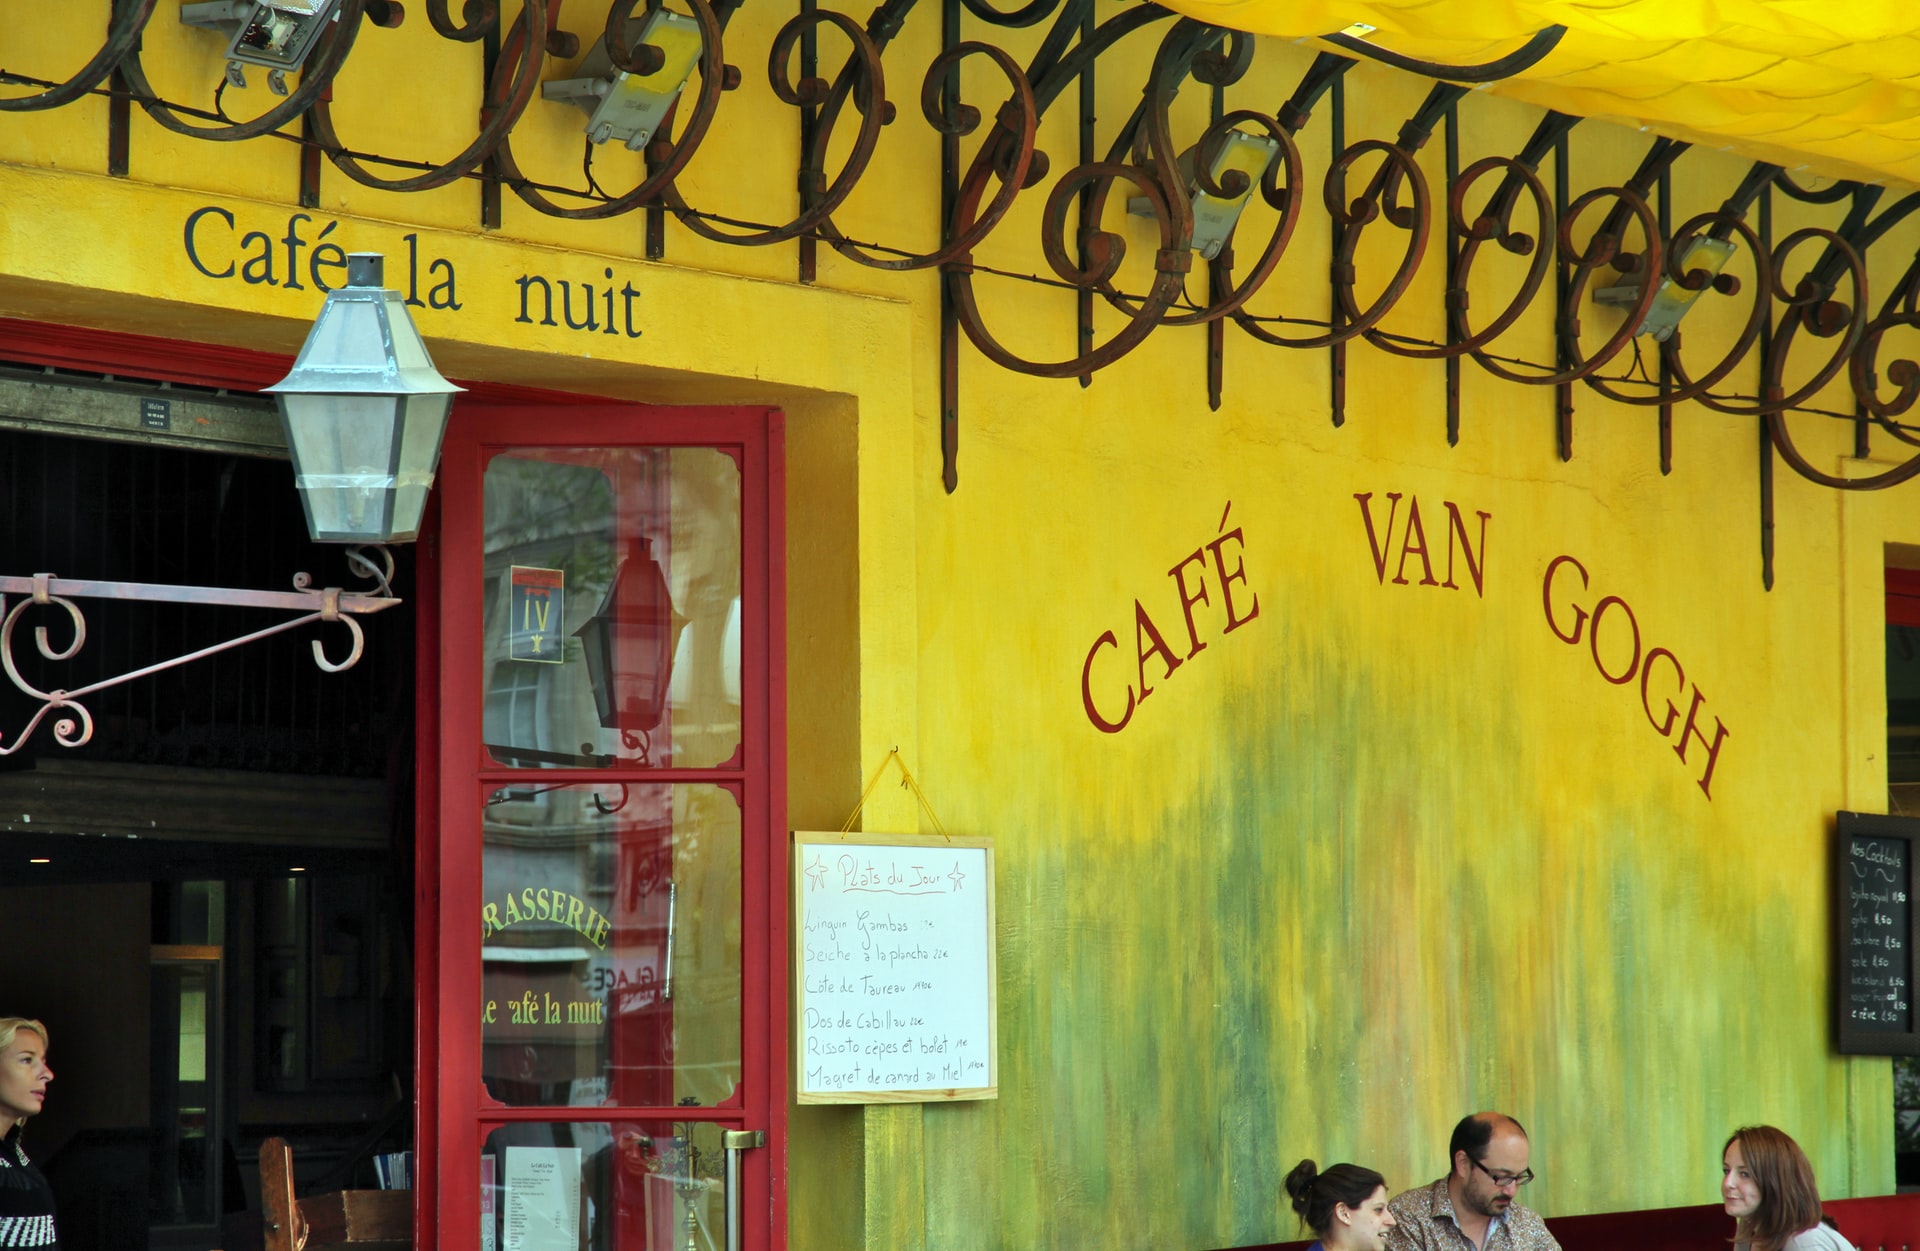 Cafe Van Gogh